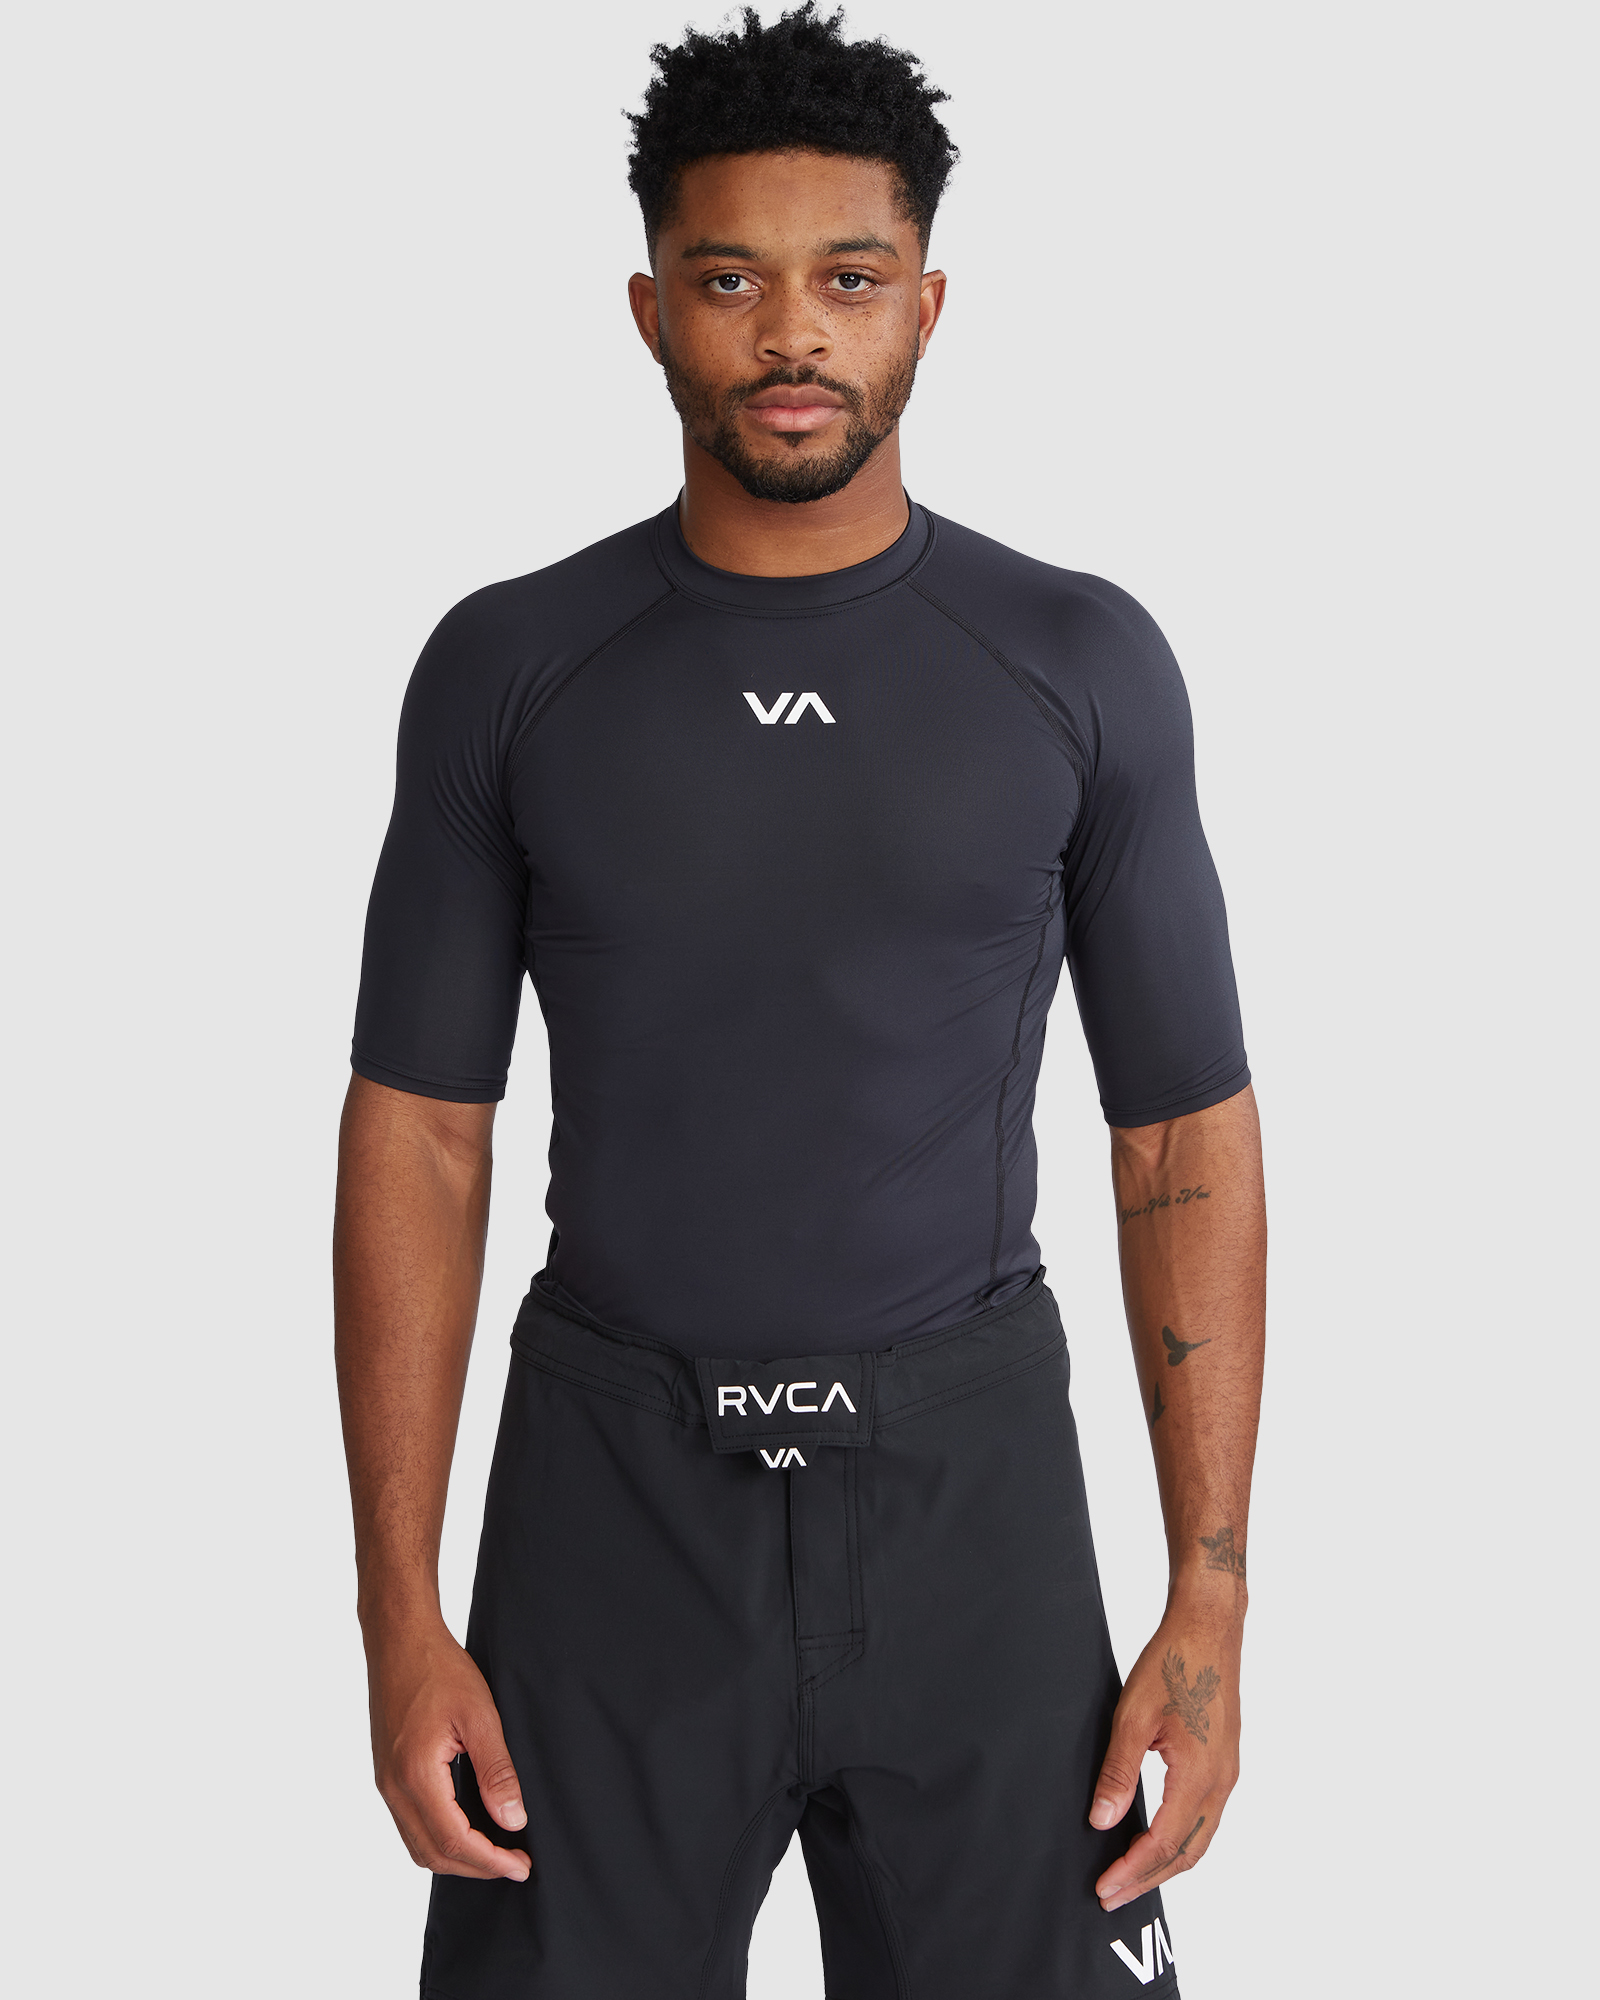 Rvca Sport Short Sleeve Rashguard - Black | SurfStitch